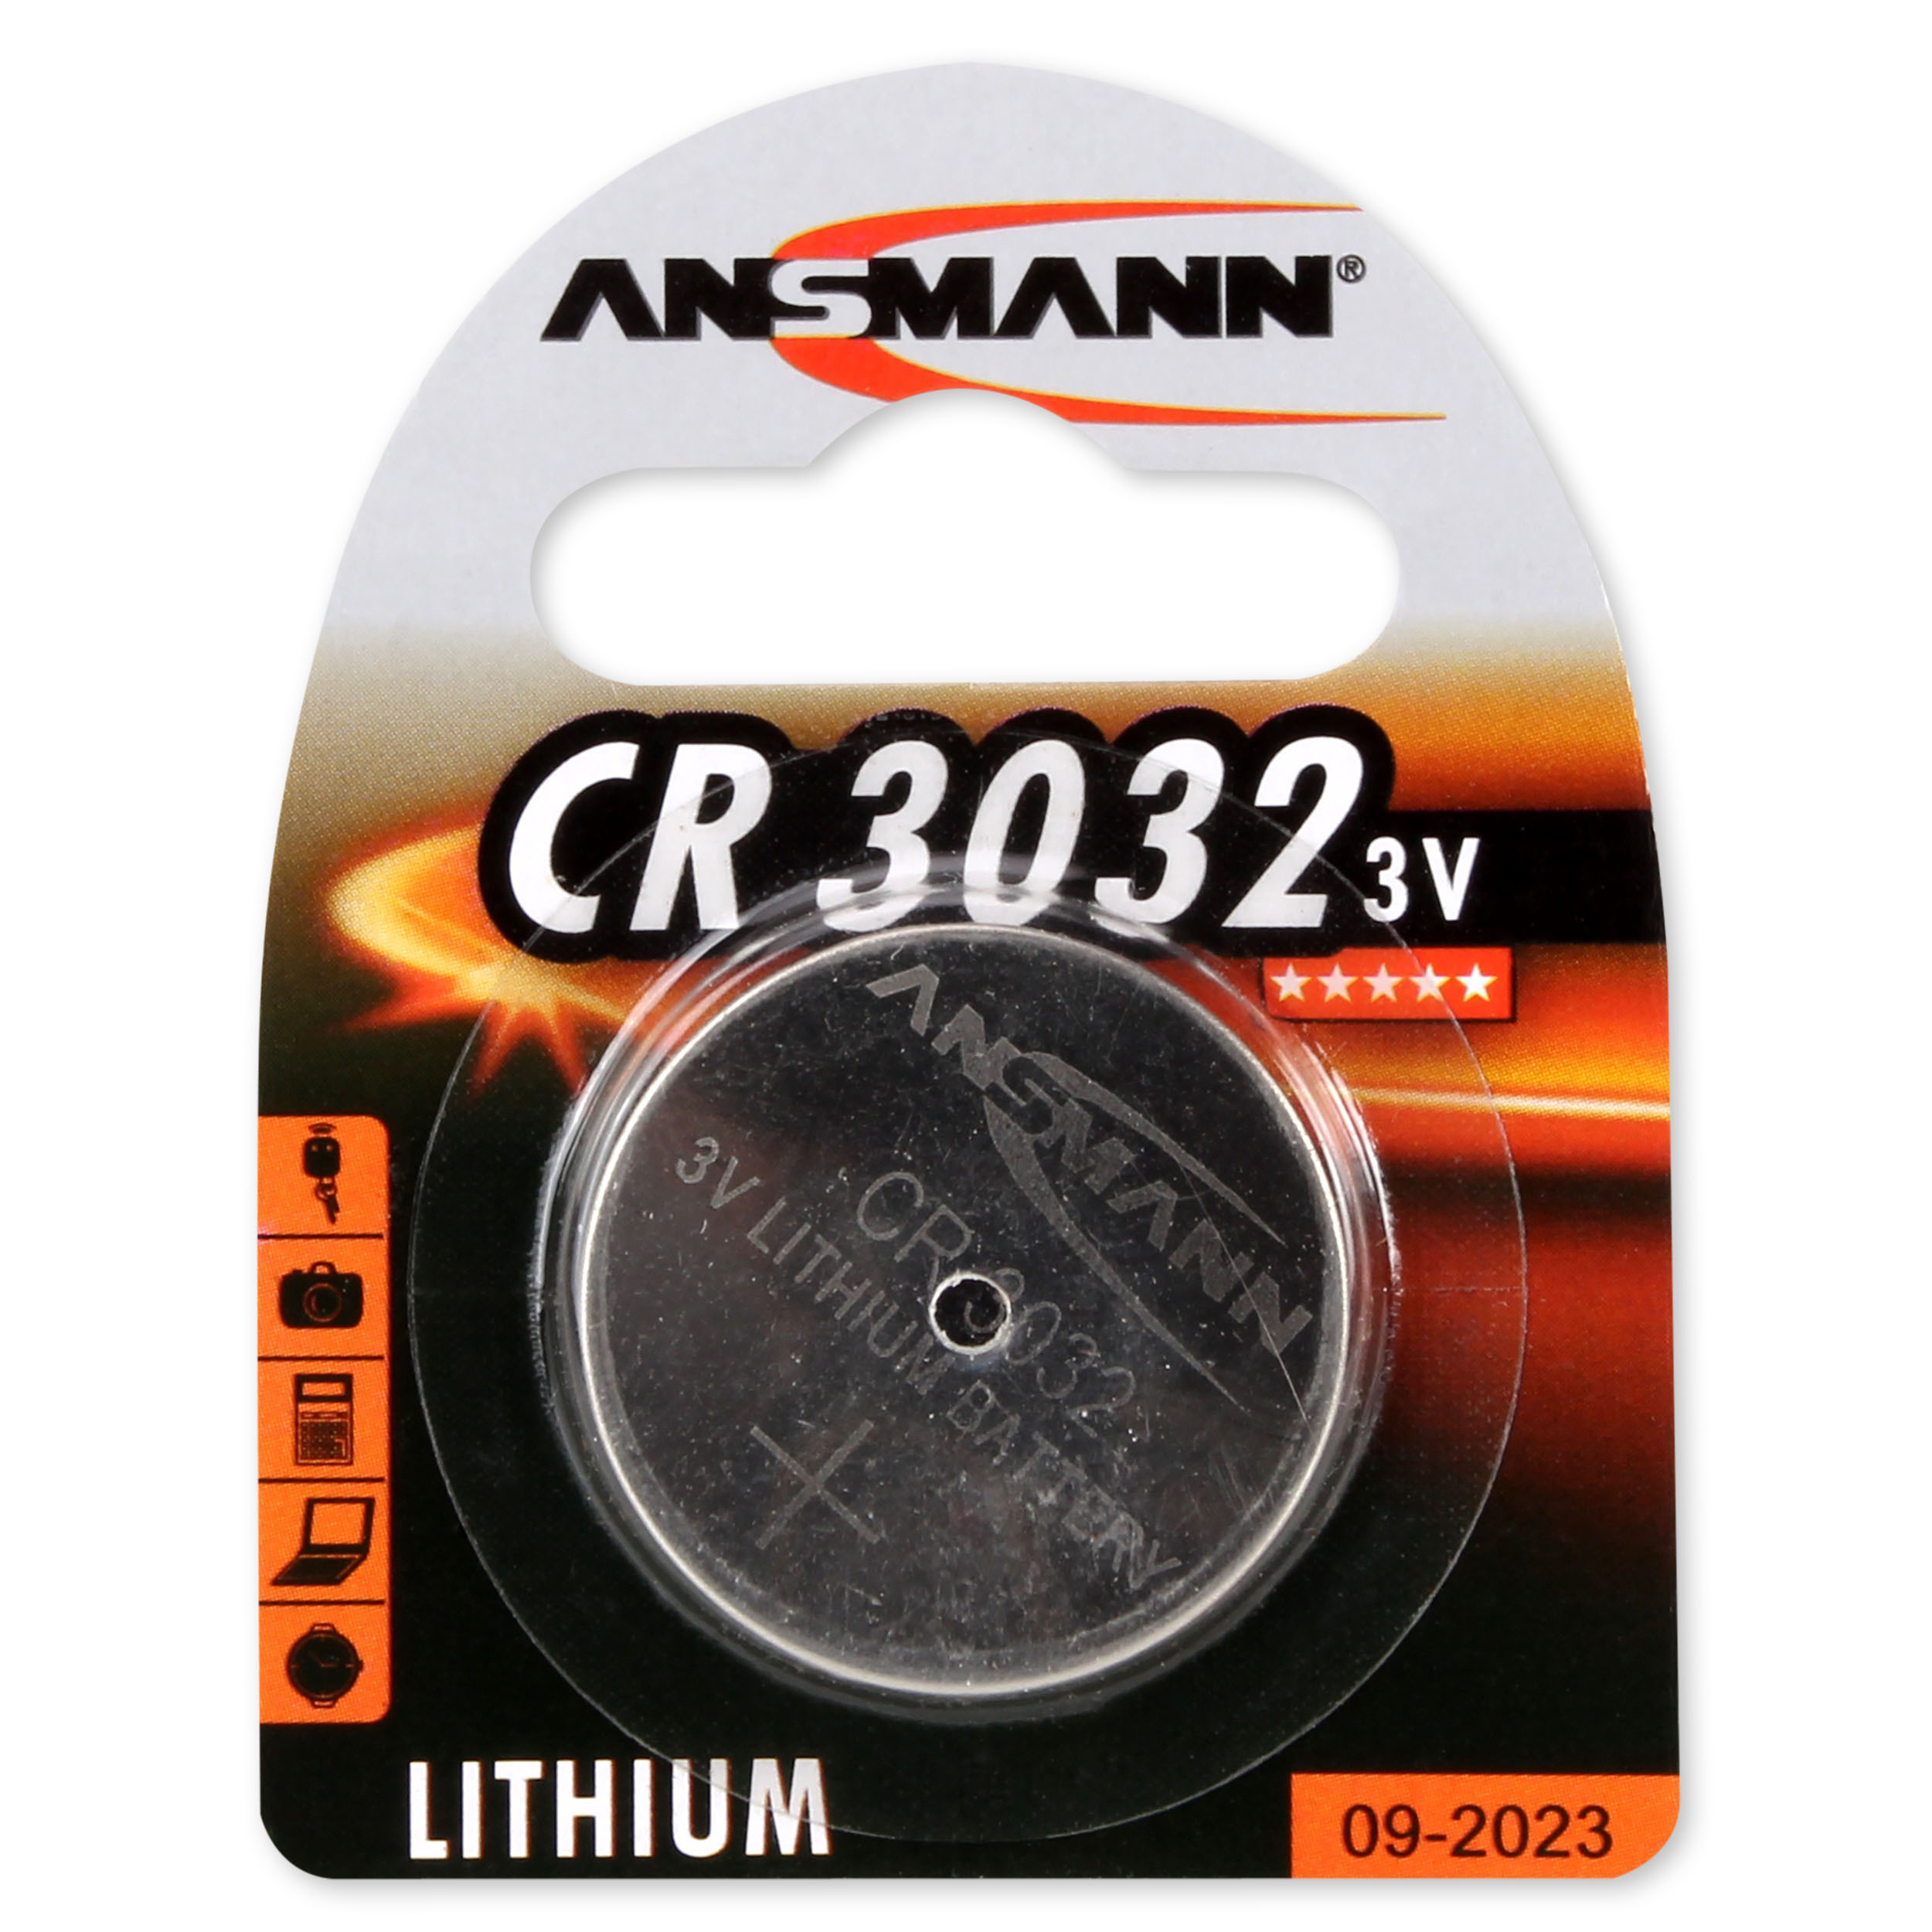 ANSMANN CR3032 CR3032 Knopfzelle, 1 Stück Lithium, Volt 3